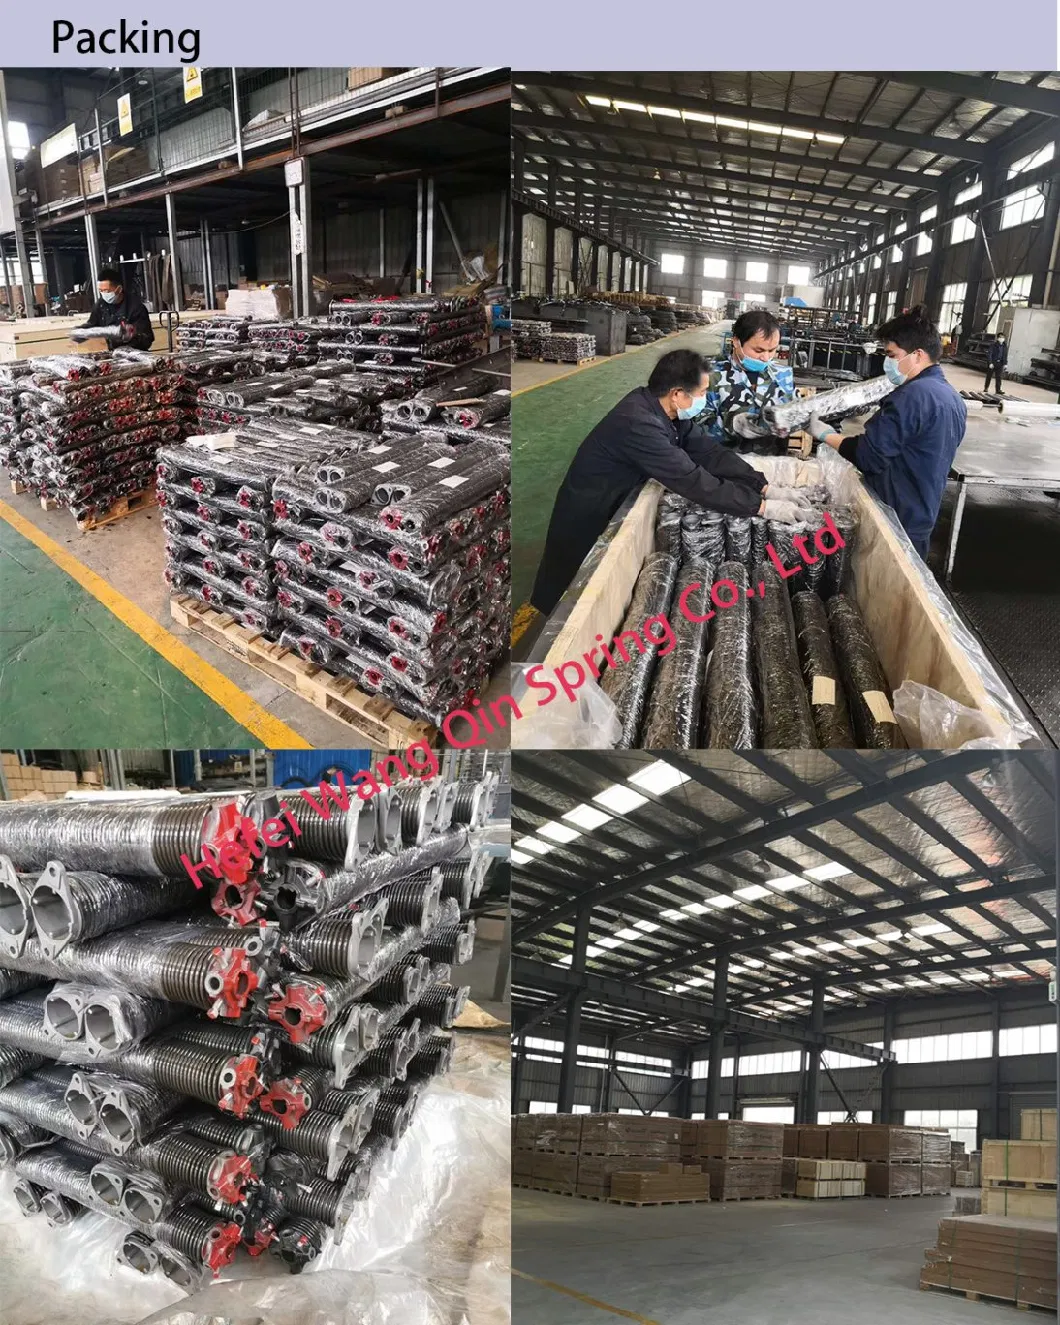 China Factory Black and Galvanized Steel Garage Door Spring